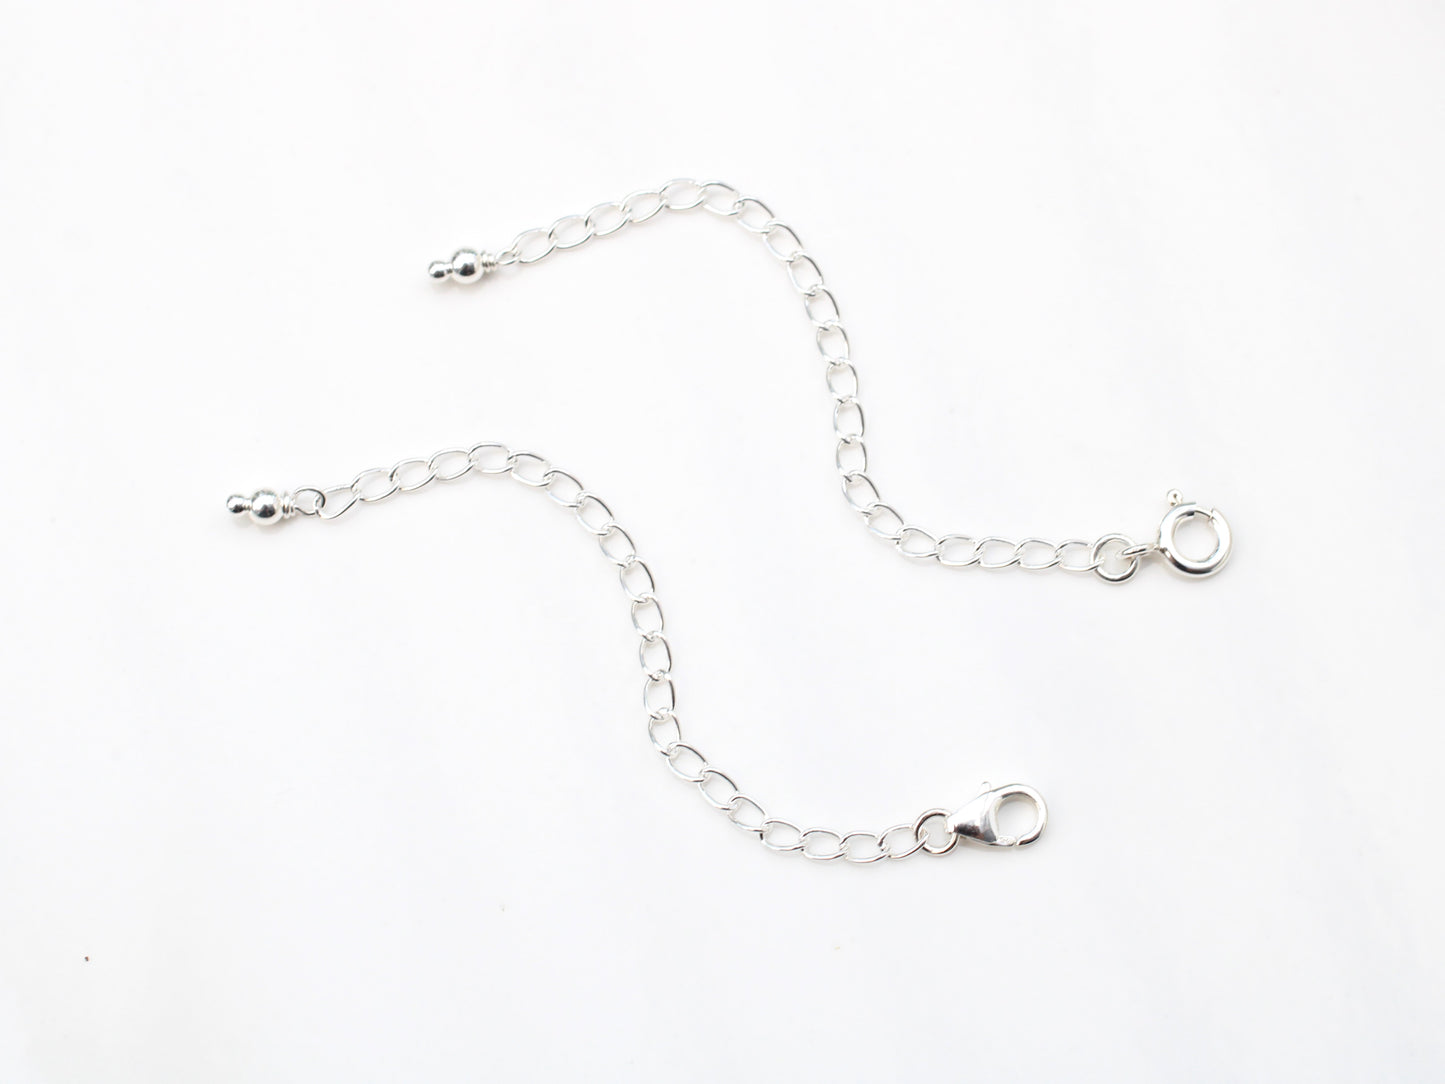 Silver necklace and bracelet extender.